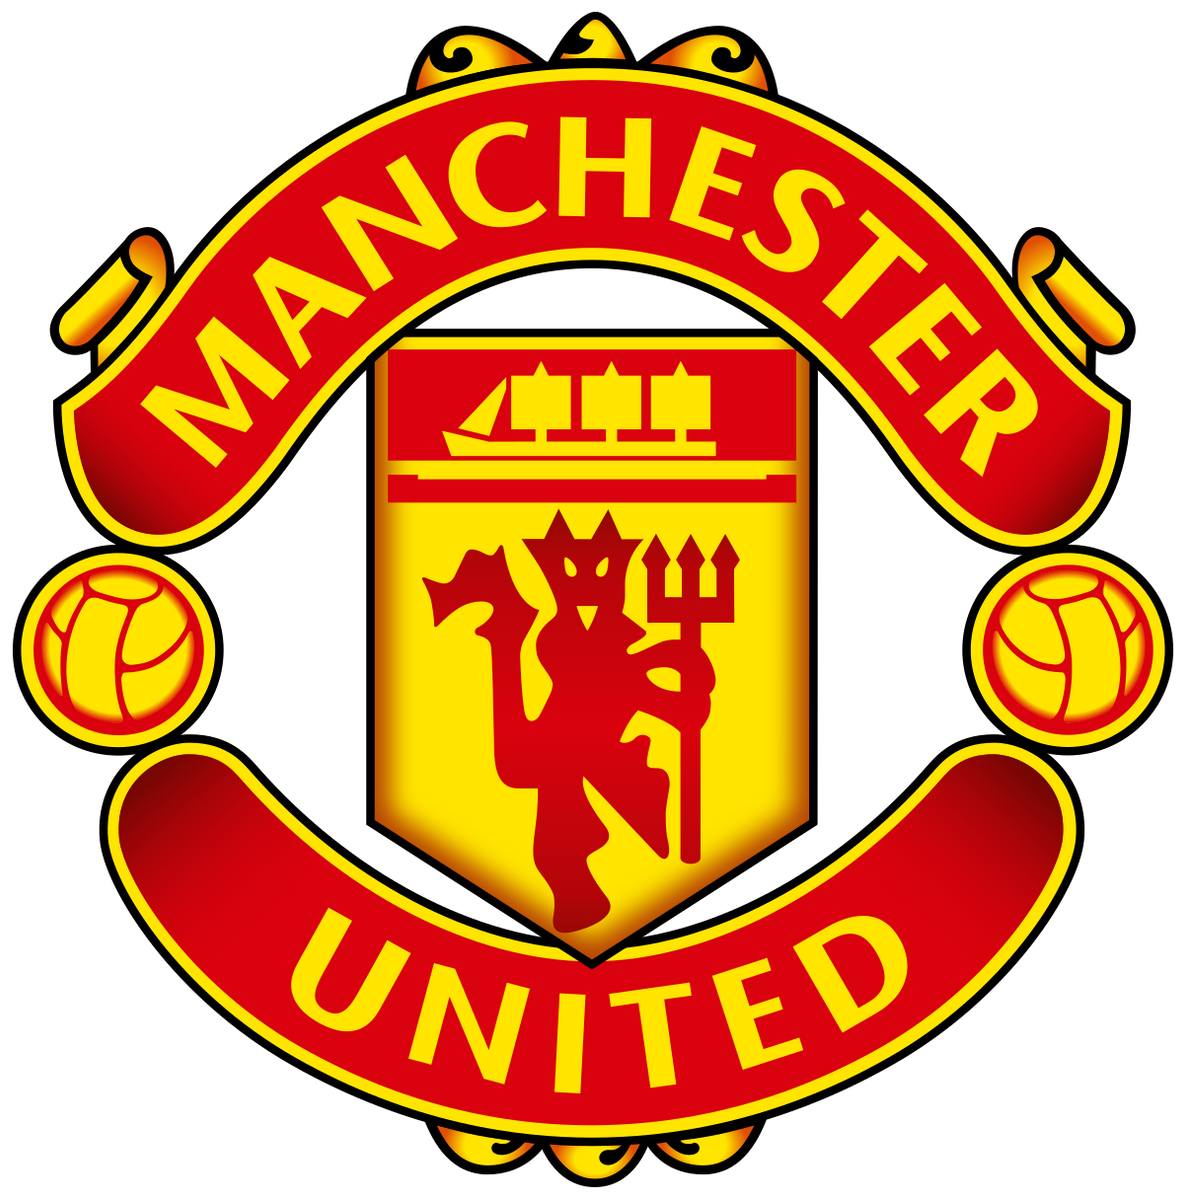 Retro Manchester United – SelectKits